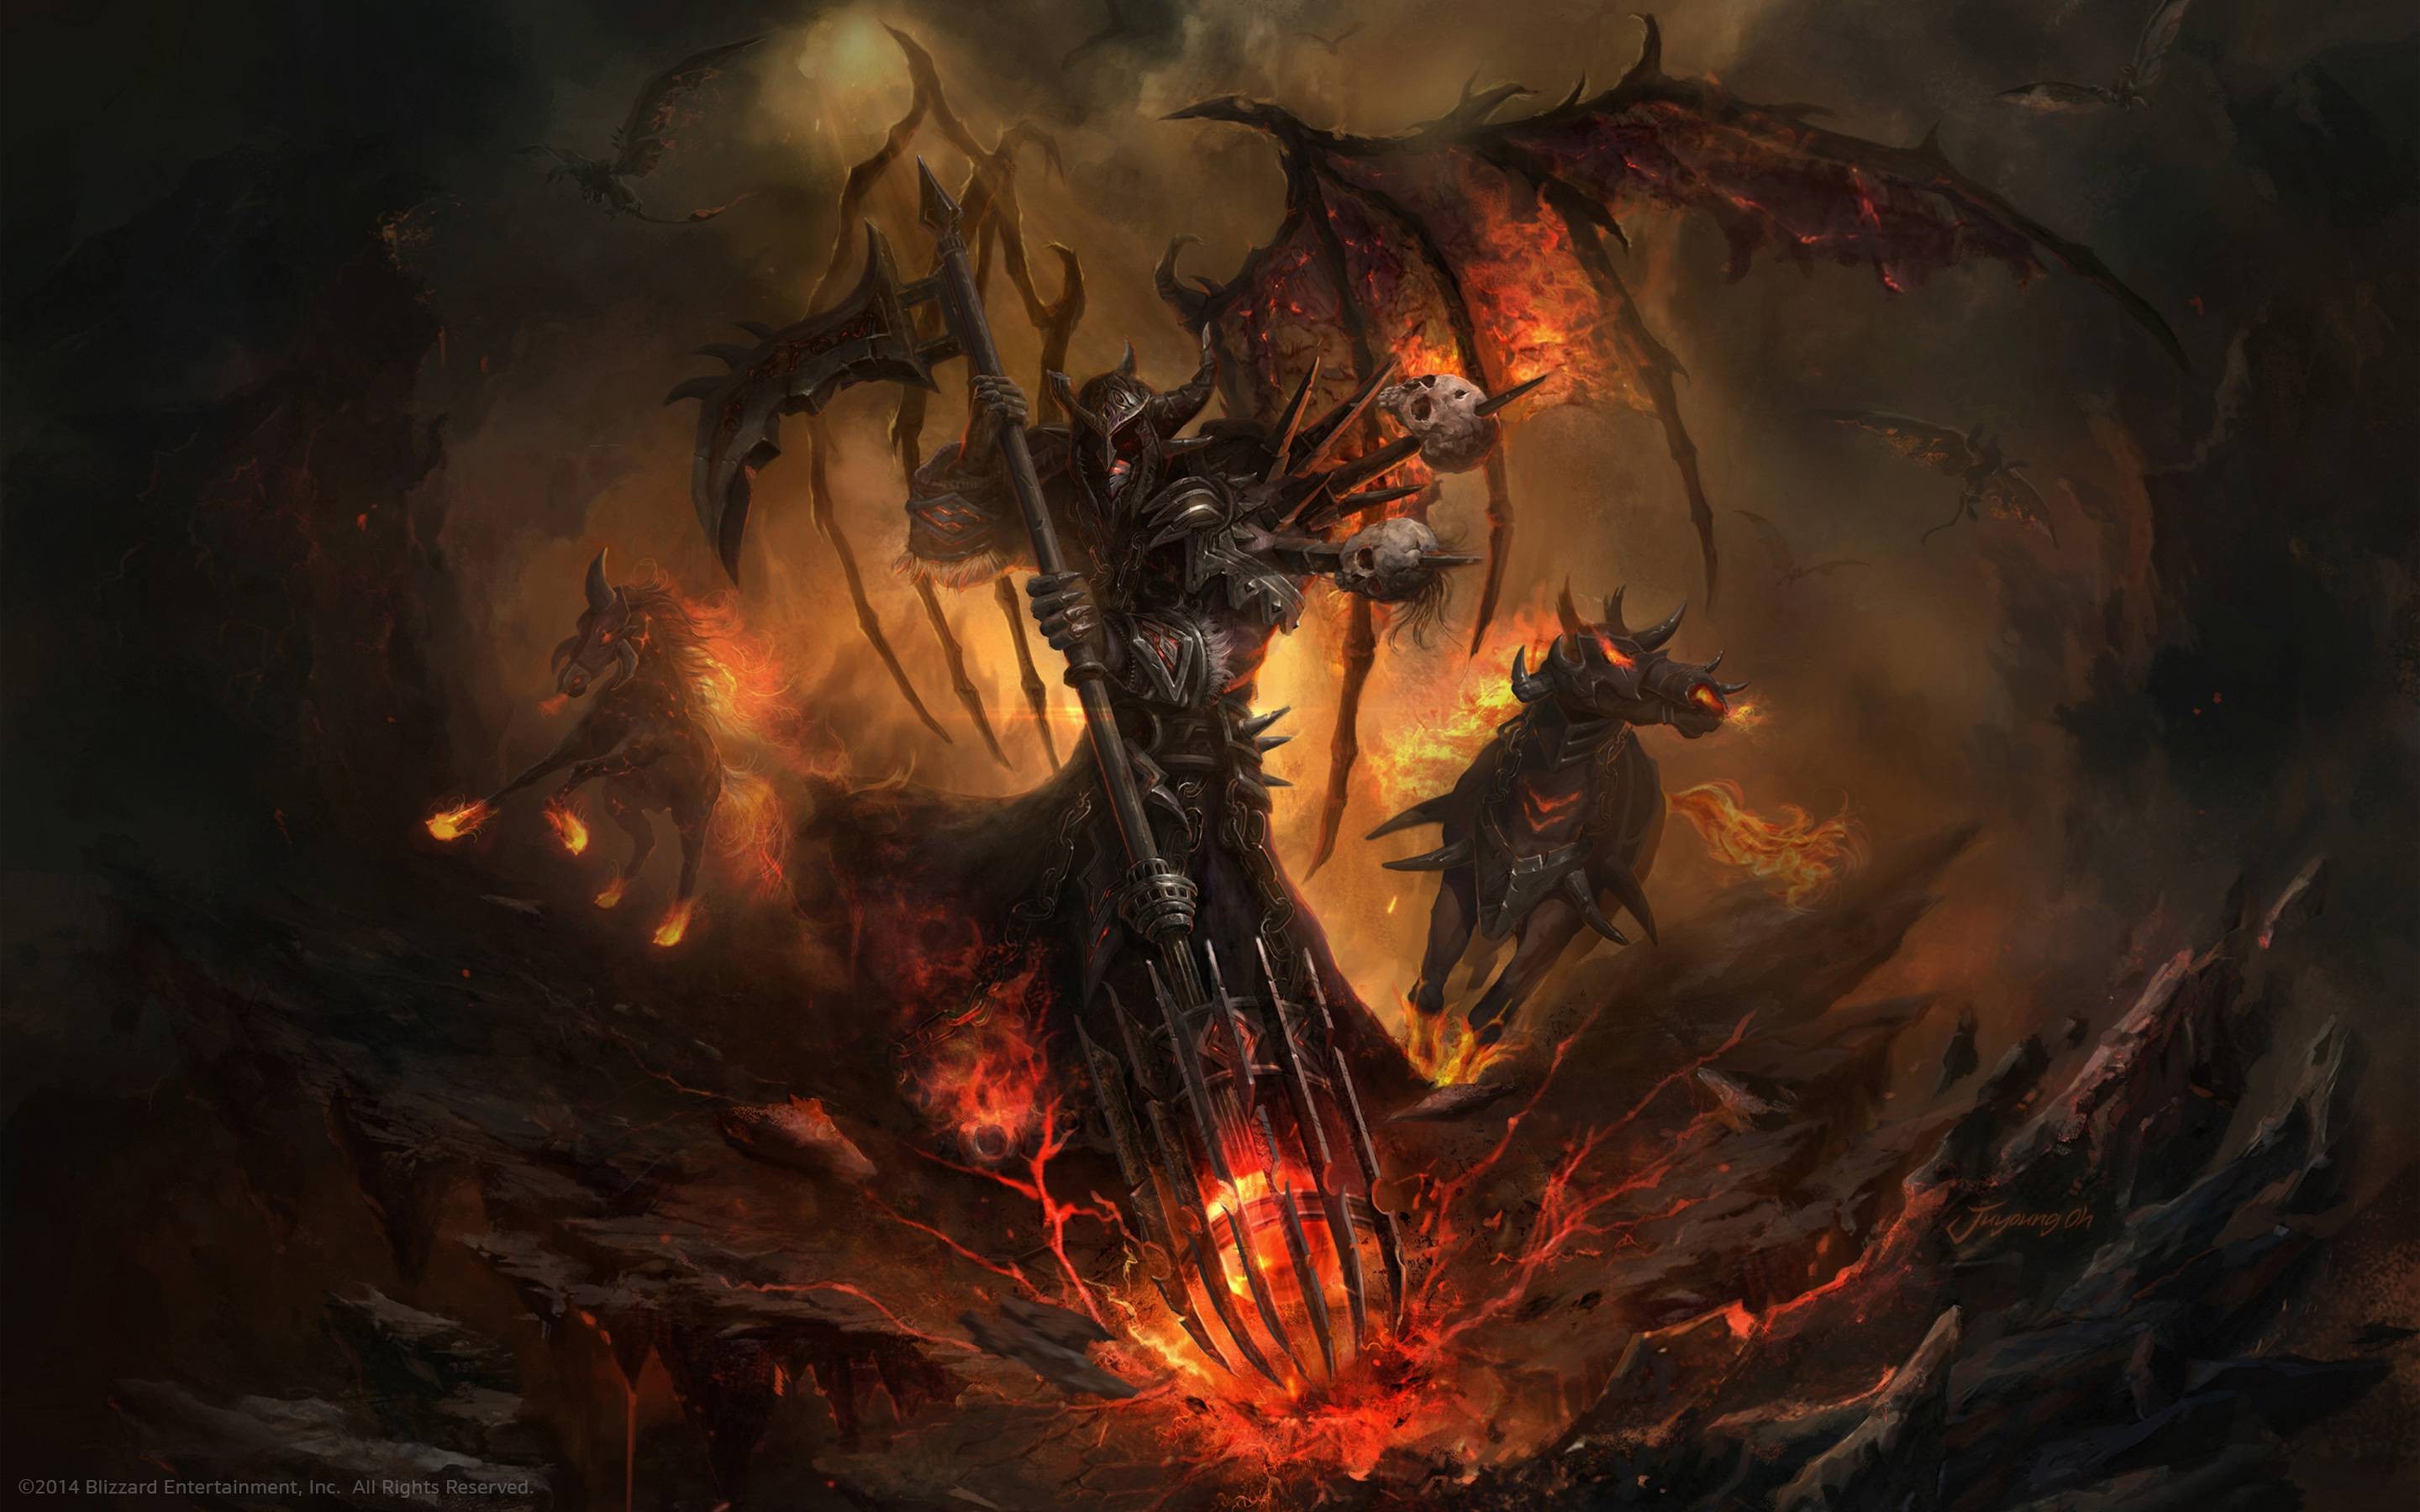 General 2880x1800 dark hell fire devil smoke scythe fantasy art artwork 2014 (Year) watermarked Blizzard Entertainment PC gaming video game art digital art